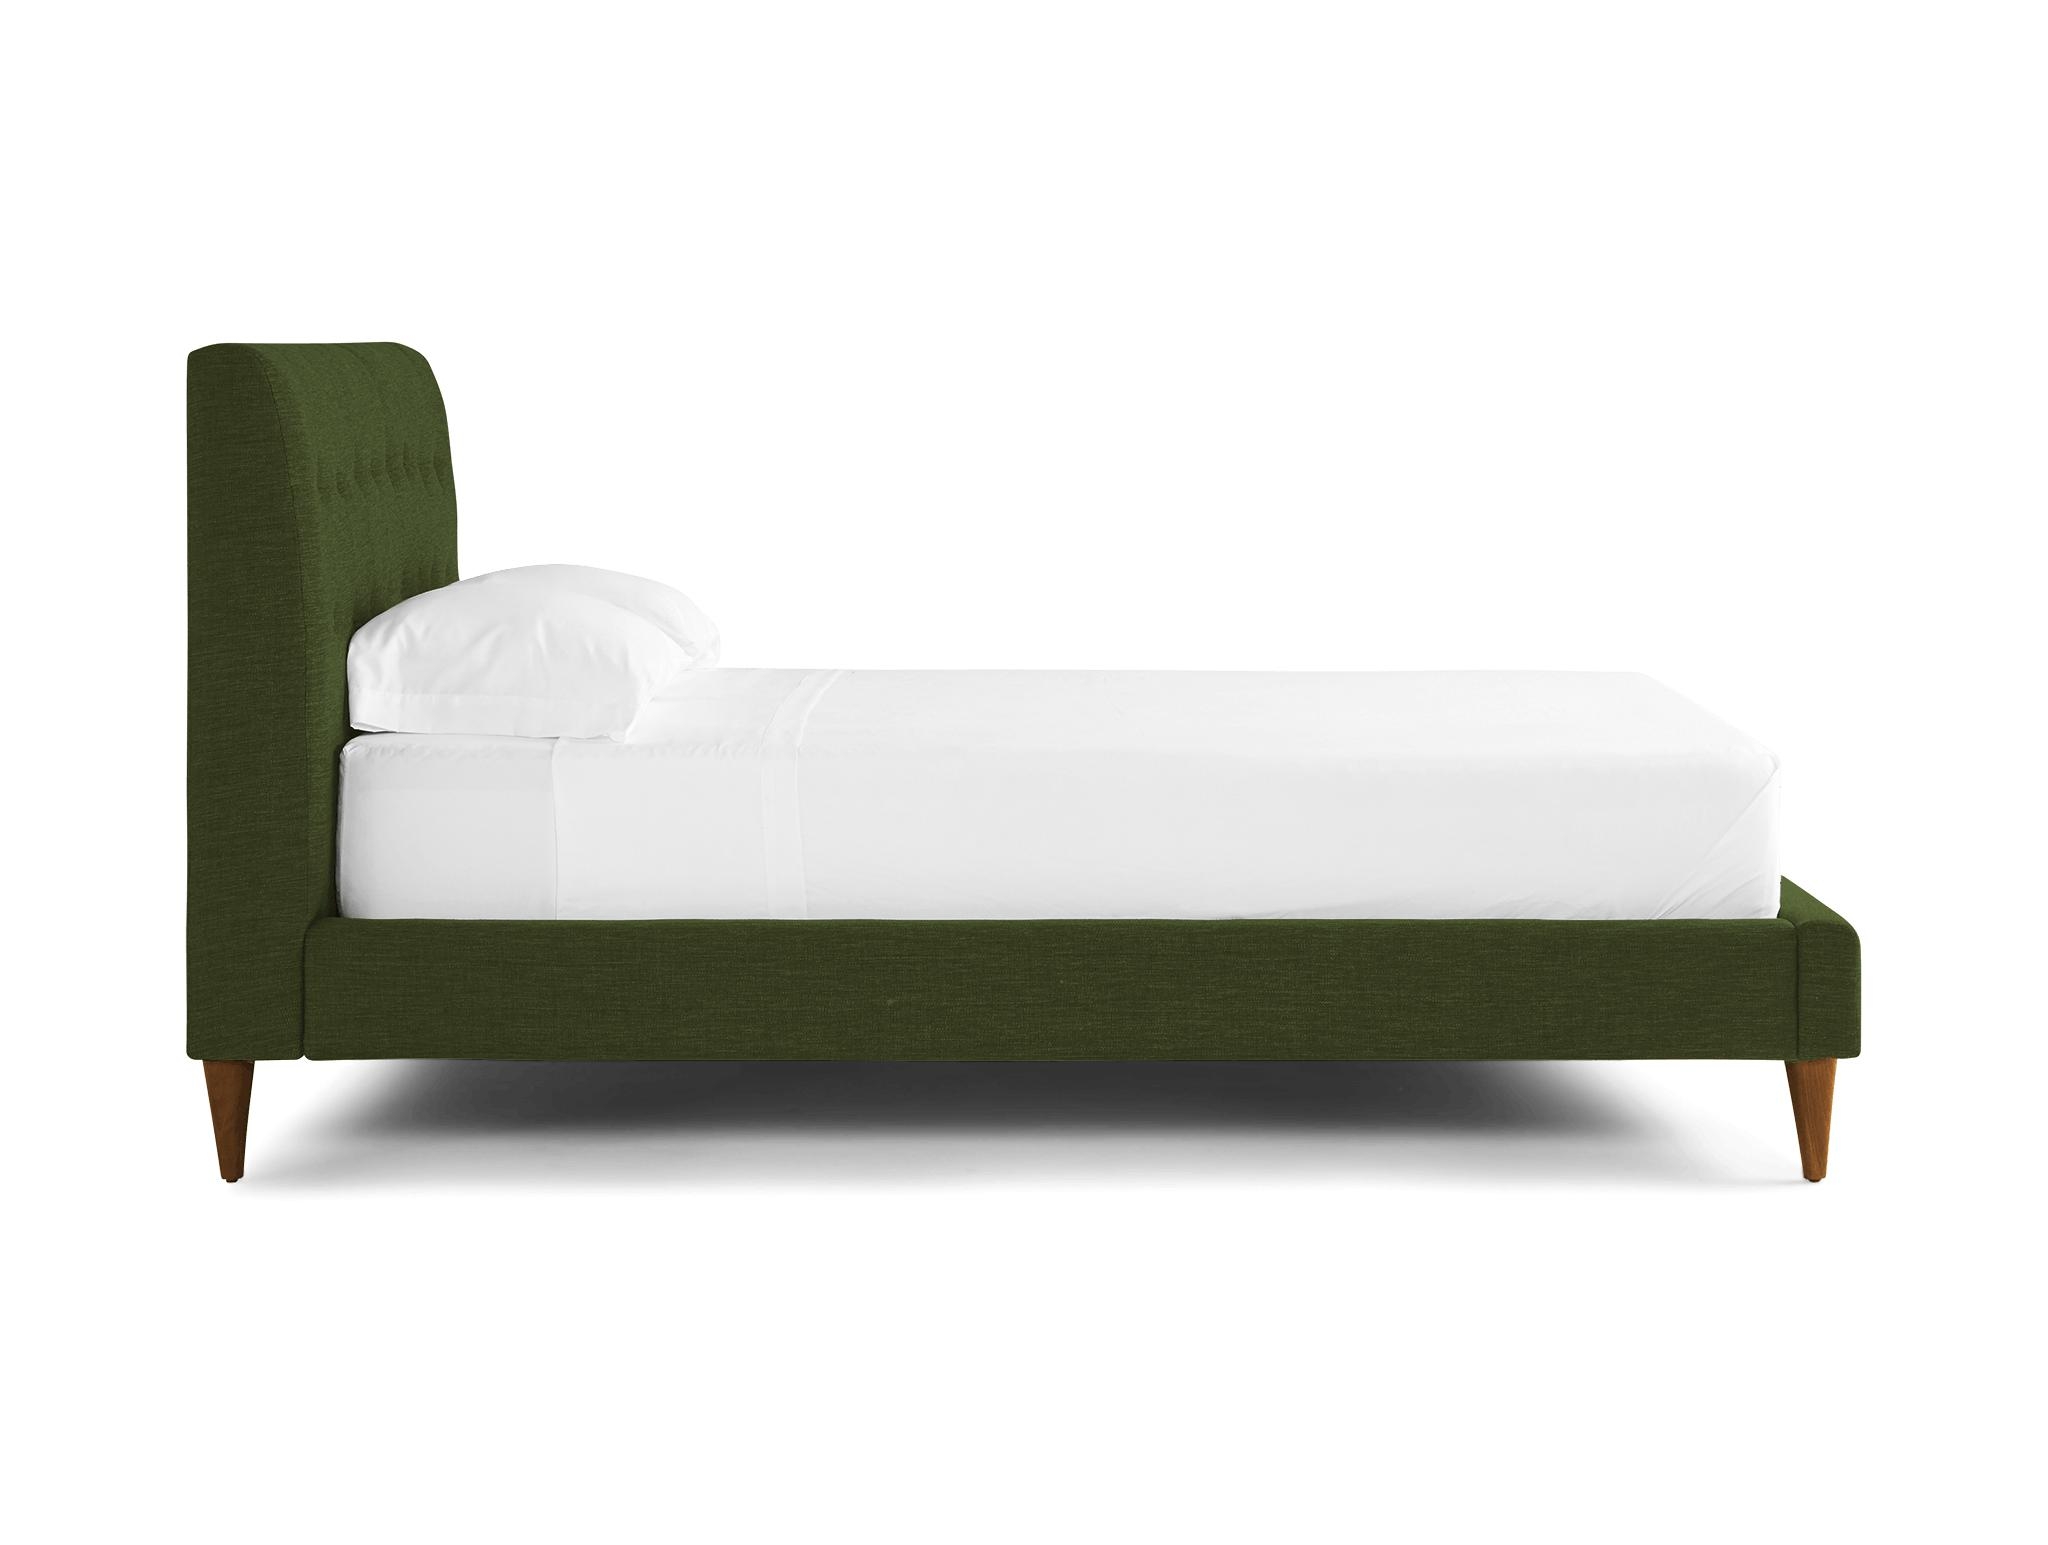 Green Eliot Mid Century Modern Bed - Royale Forest - Mocha - Eastern King - Image 2